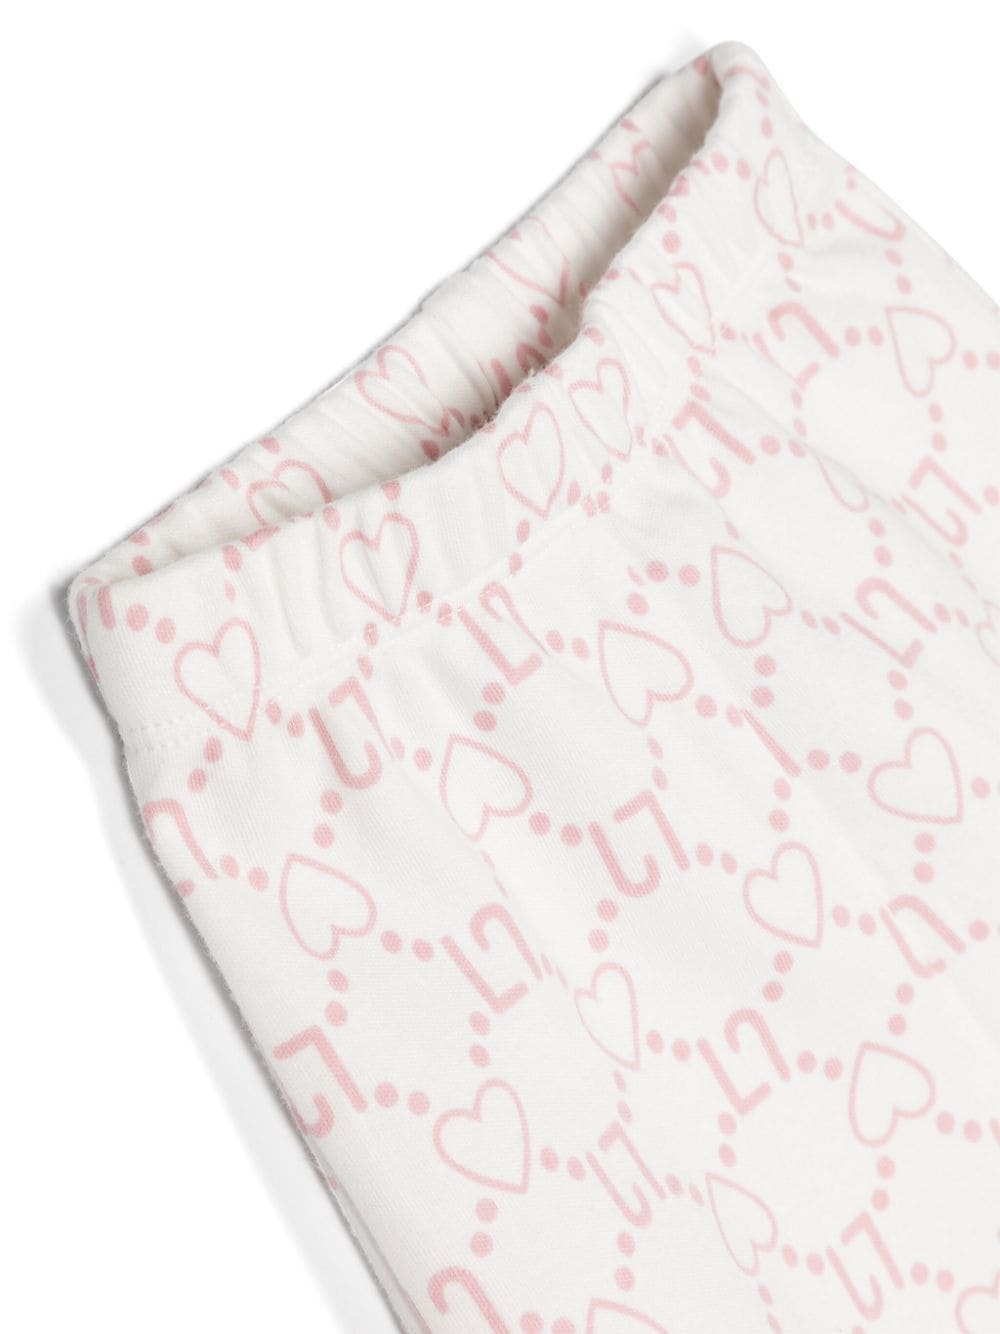 White and pink onesie for newborn girls